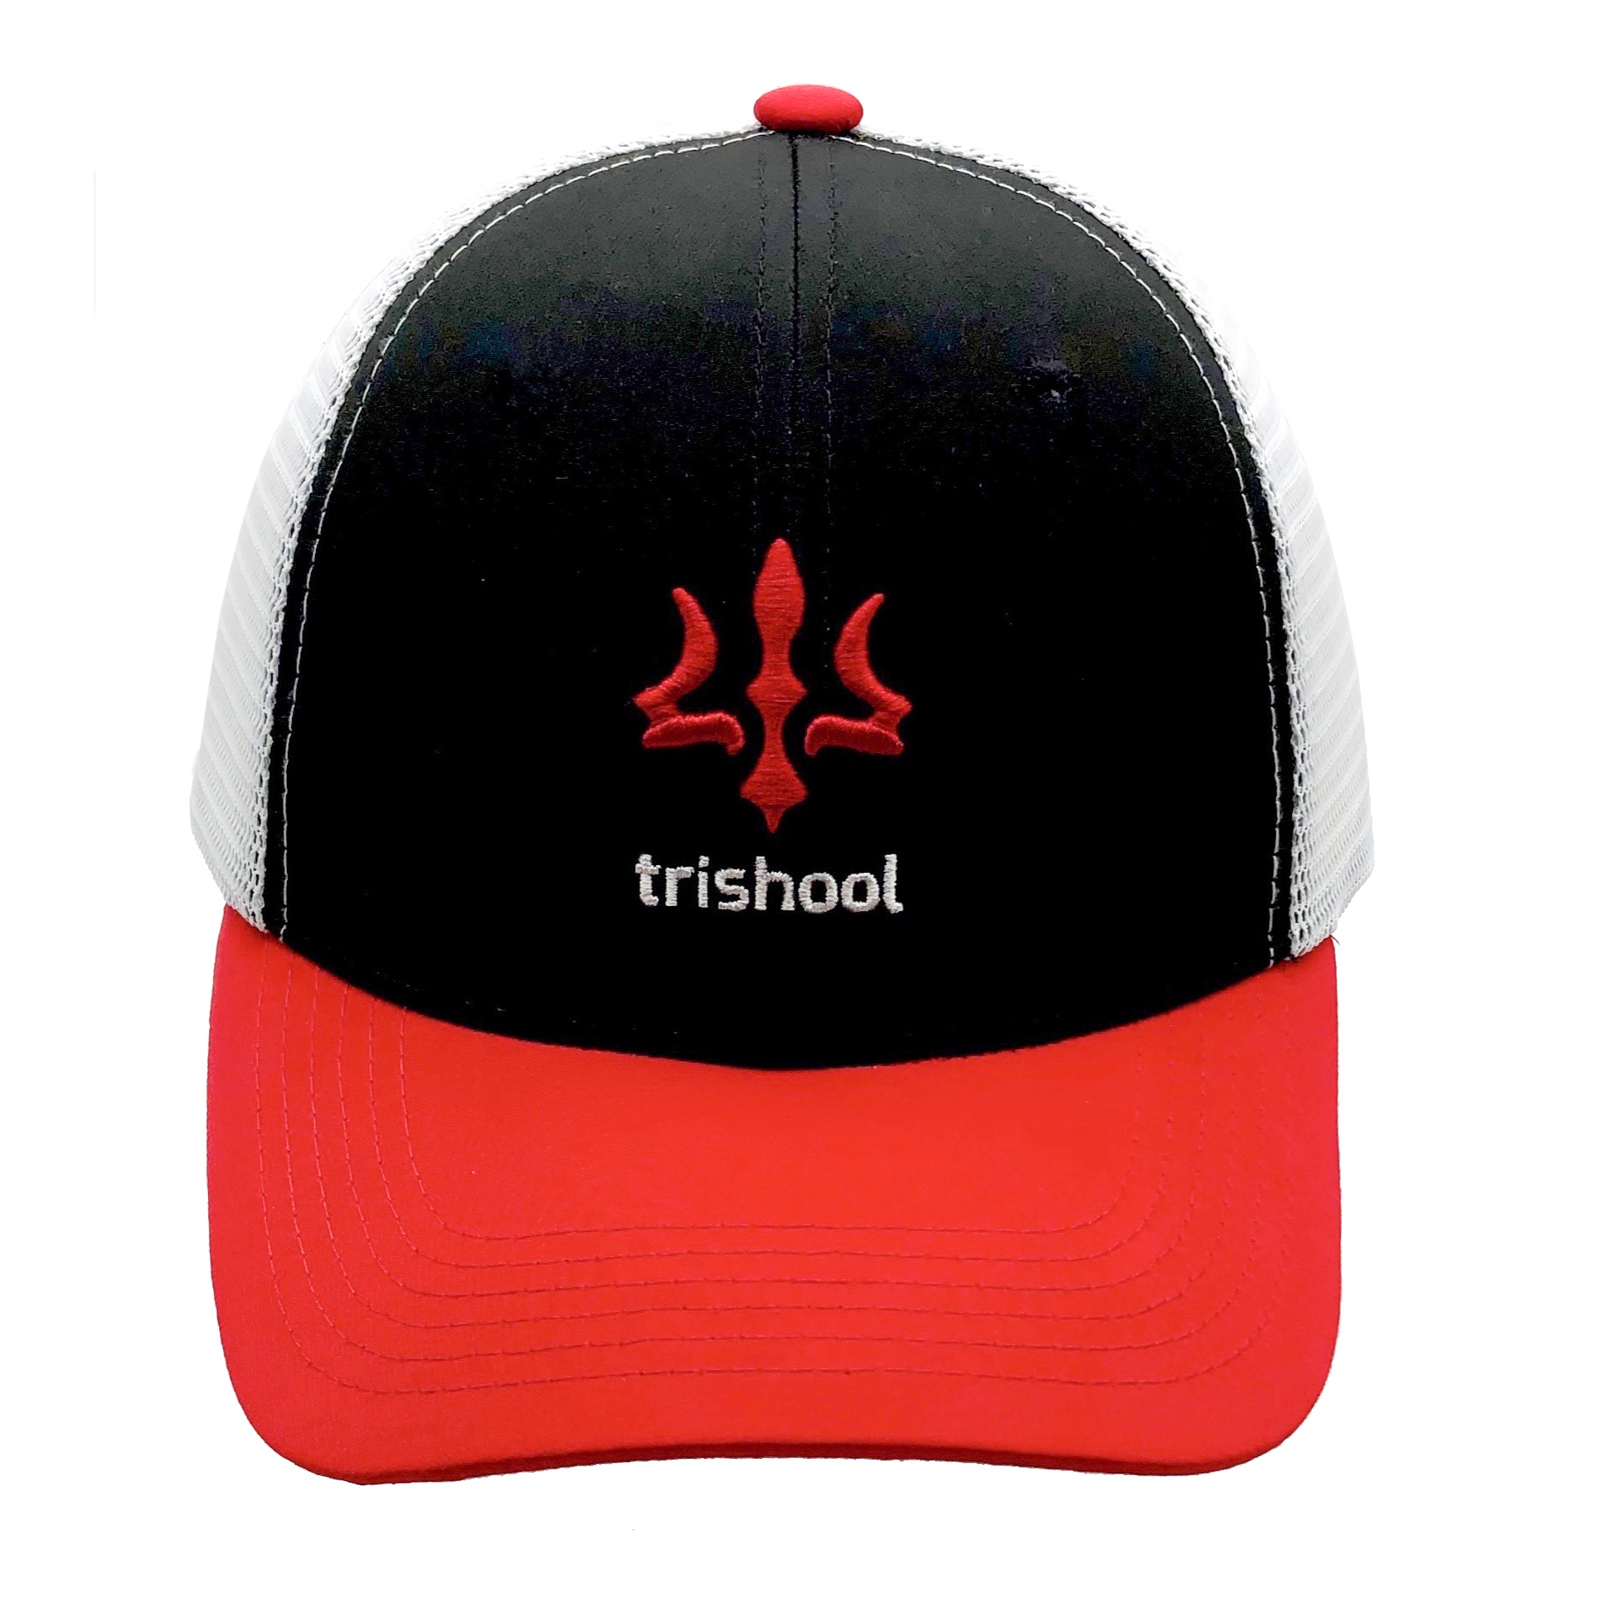 Trishool Anthem Adjustable Cap